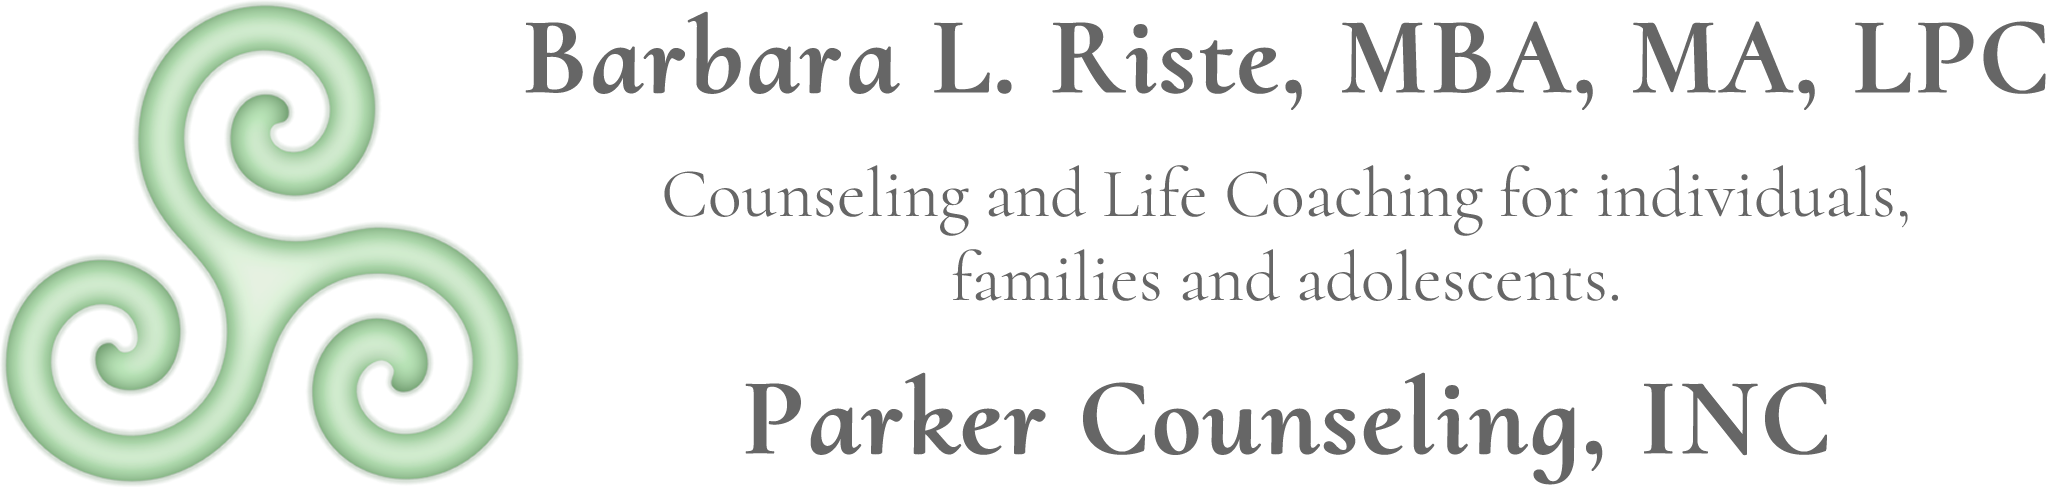 Parker Counseling, Inc.'s Logo